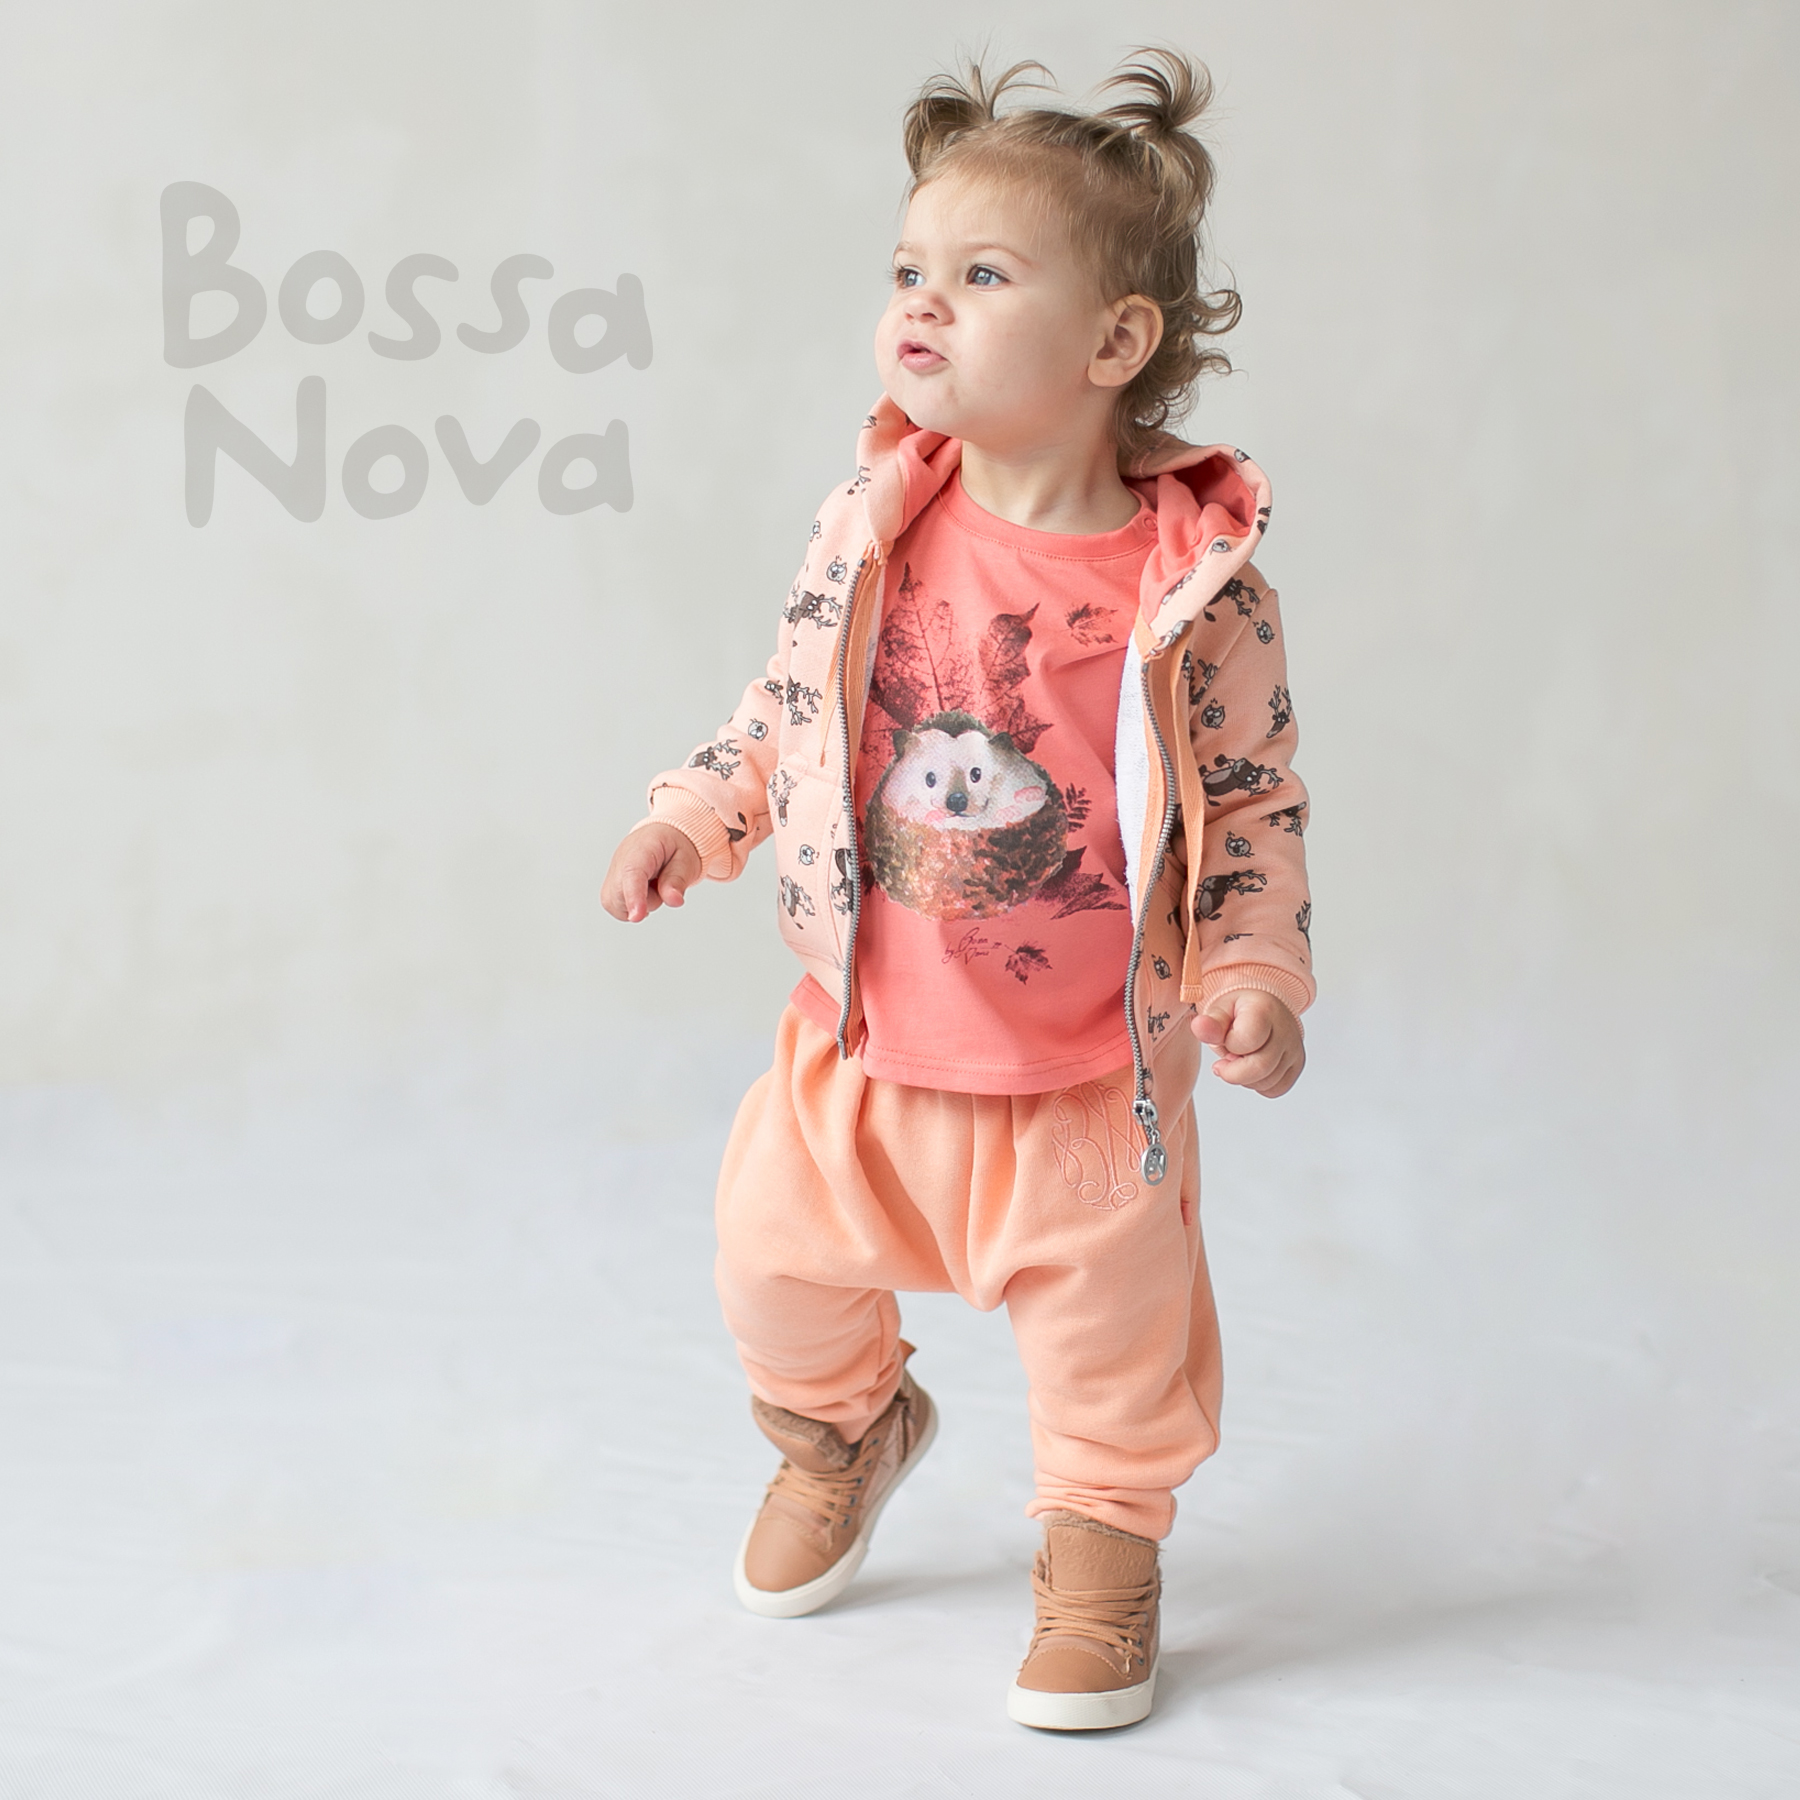 Босса нова это. Bossa Nova одежда. Bossa Nova костюм. Bossa Nova детская. Босса Нова логотип.